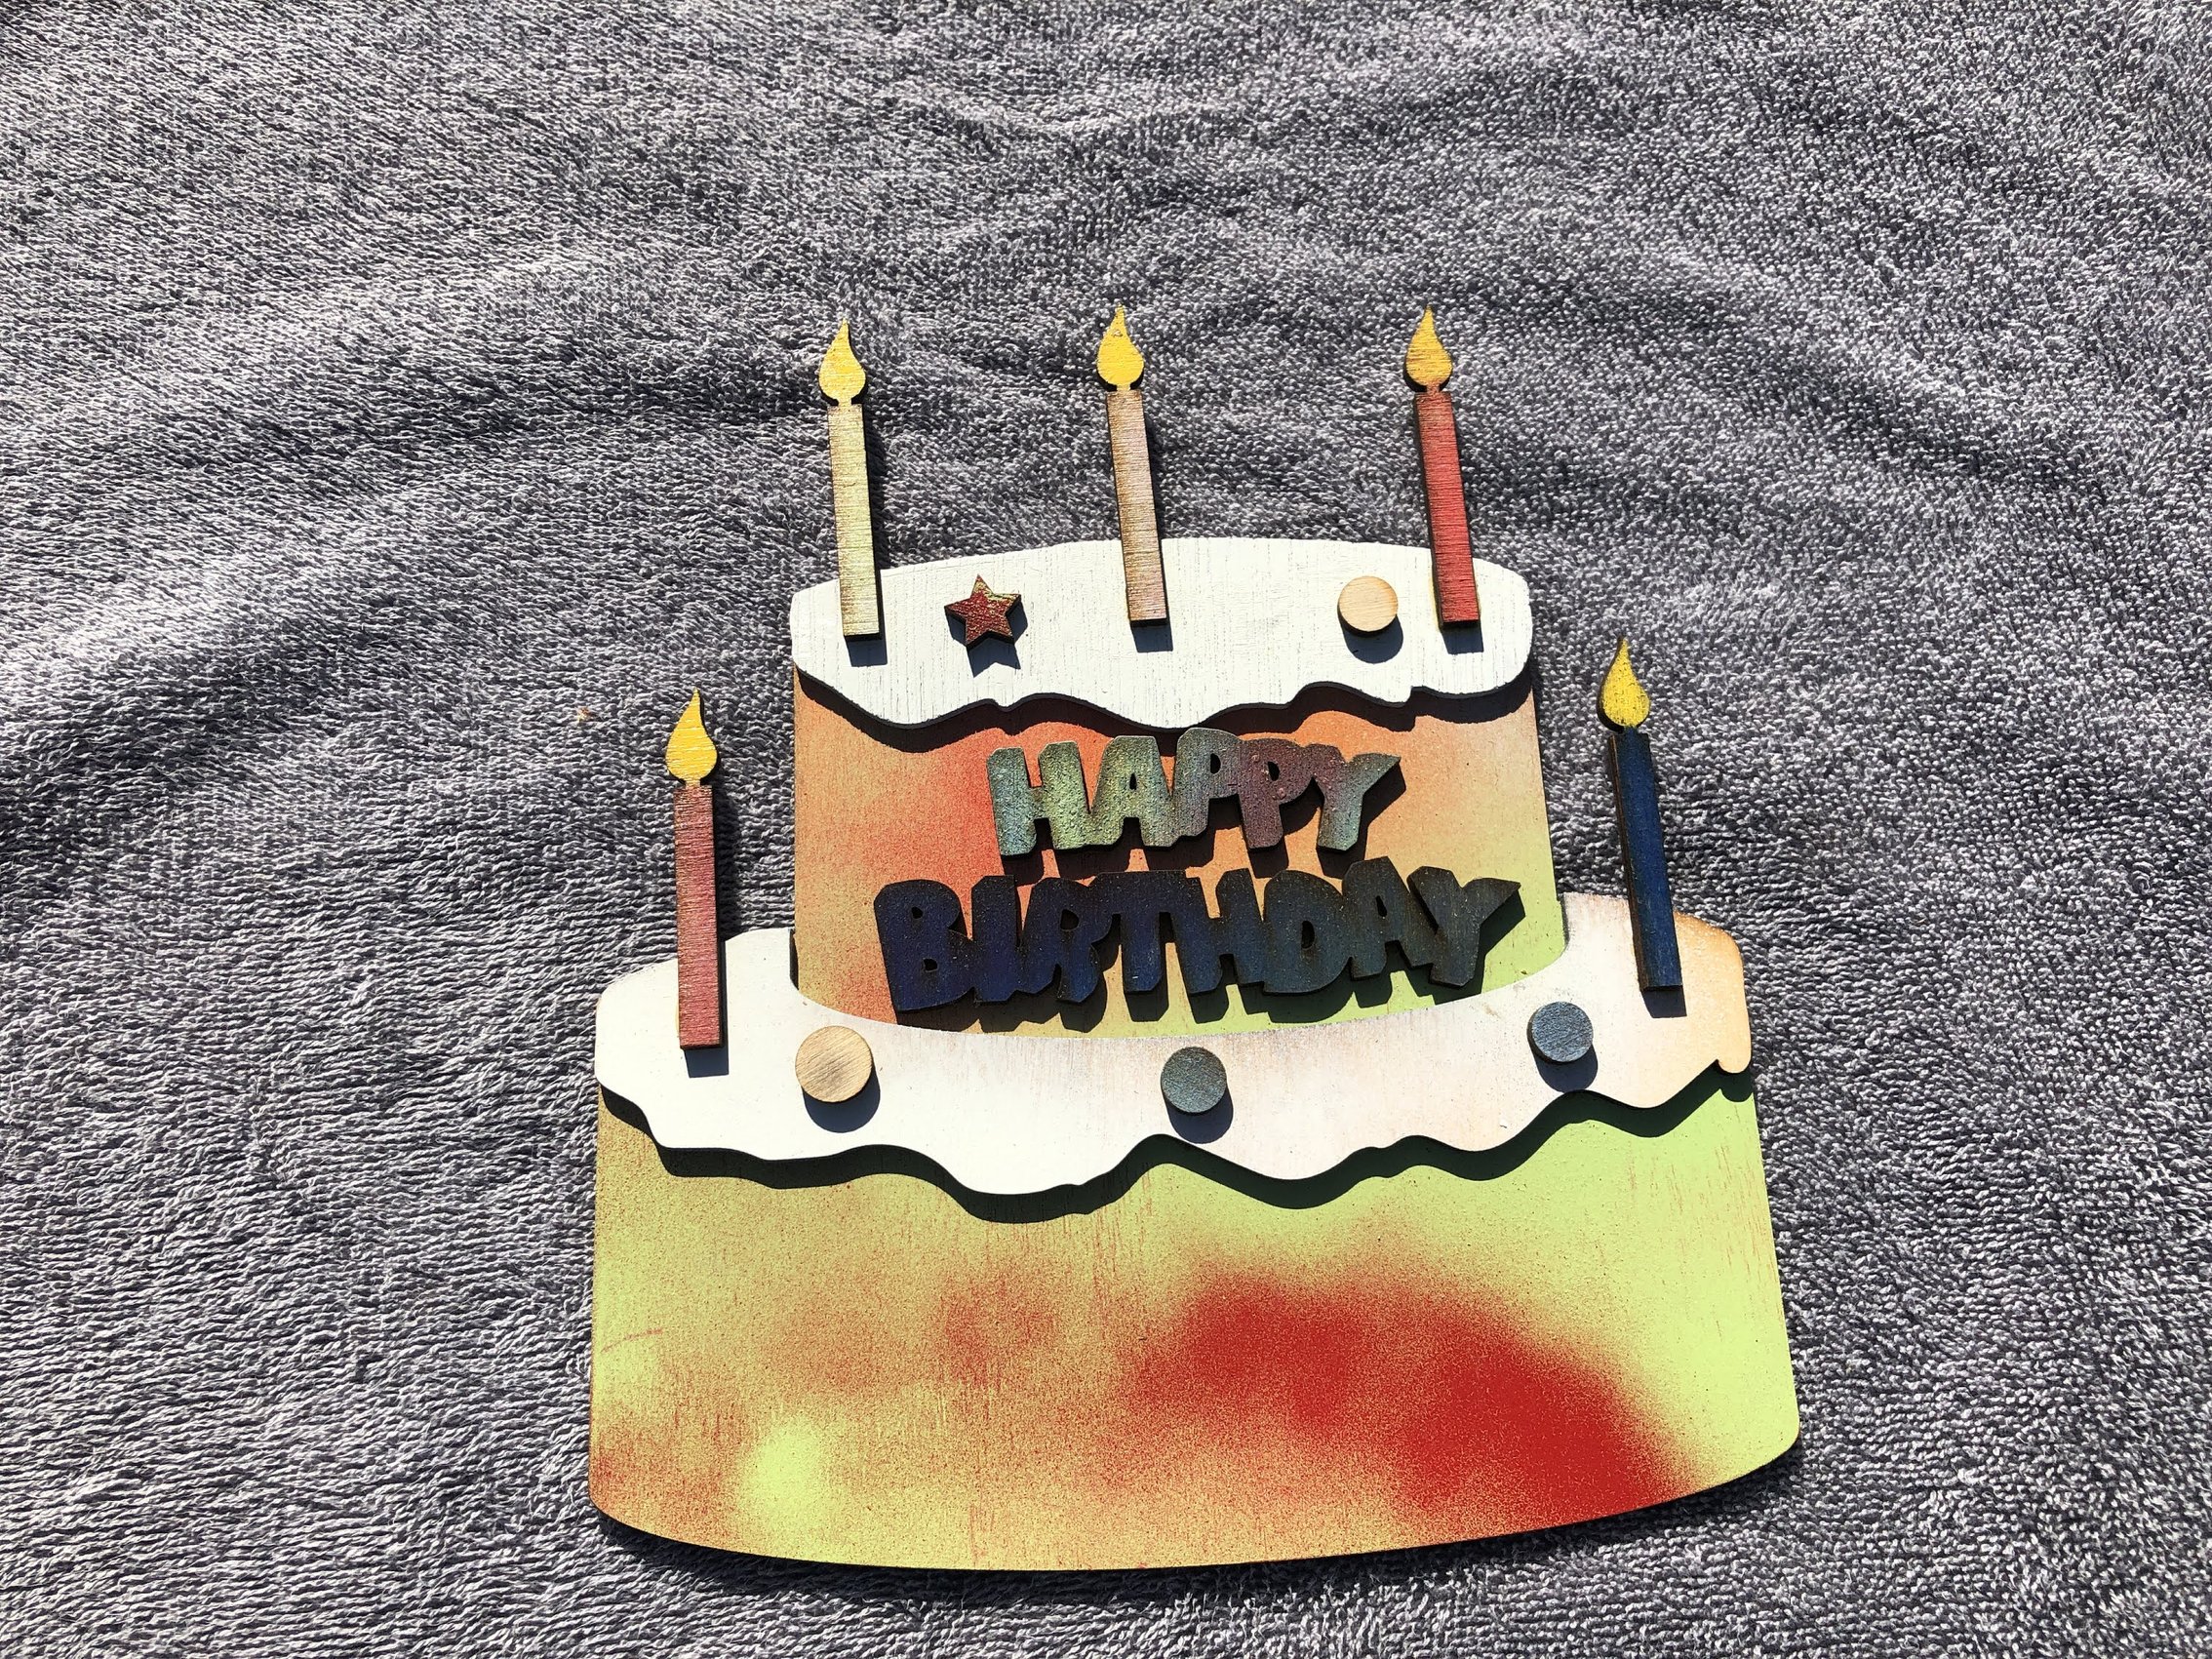 Happy Birthday Wooden Cake (26).jpg